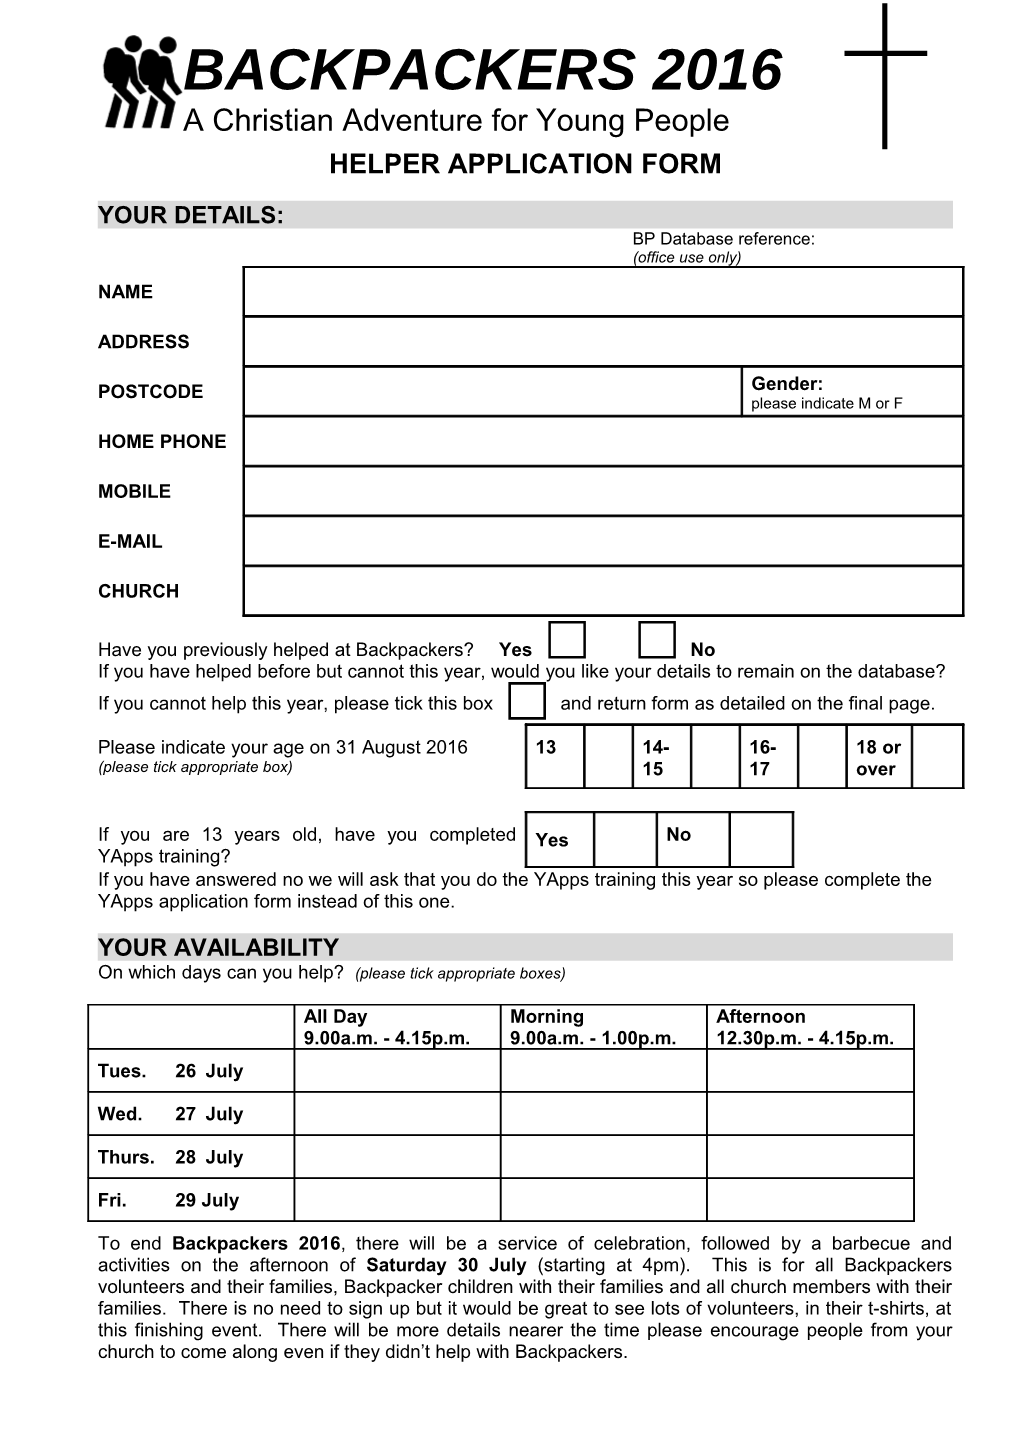 Helper Application Form